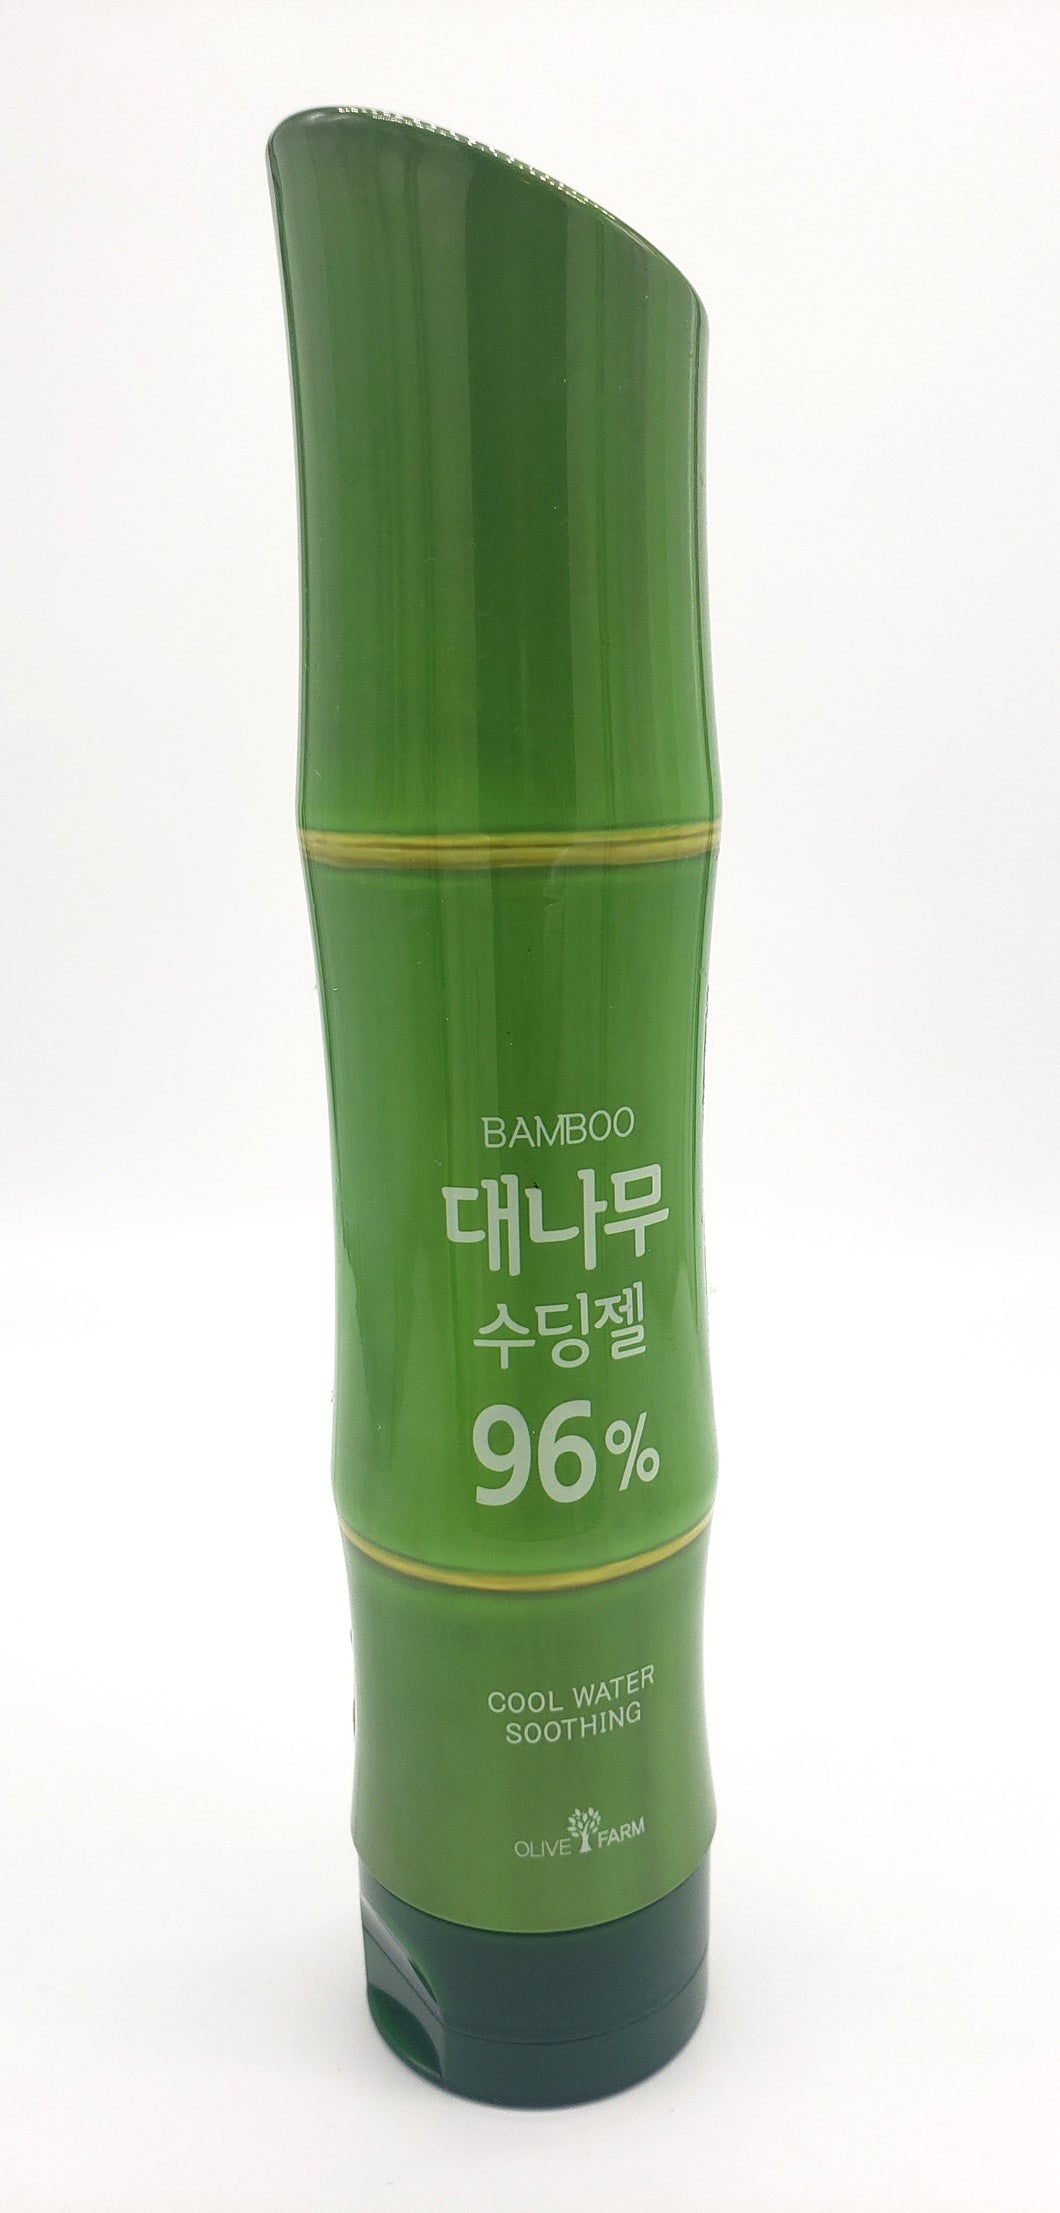 Bamboo Extract Soothing Moisturizing Gel